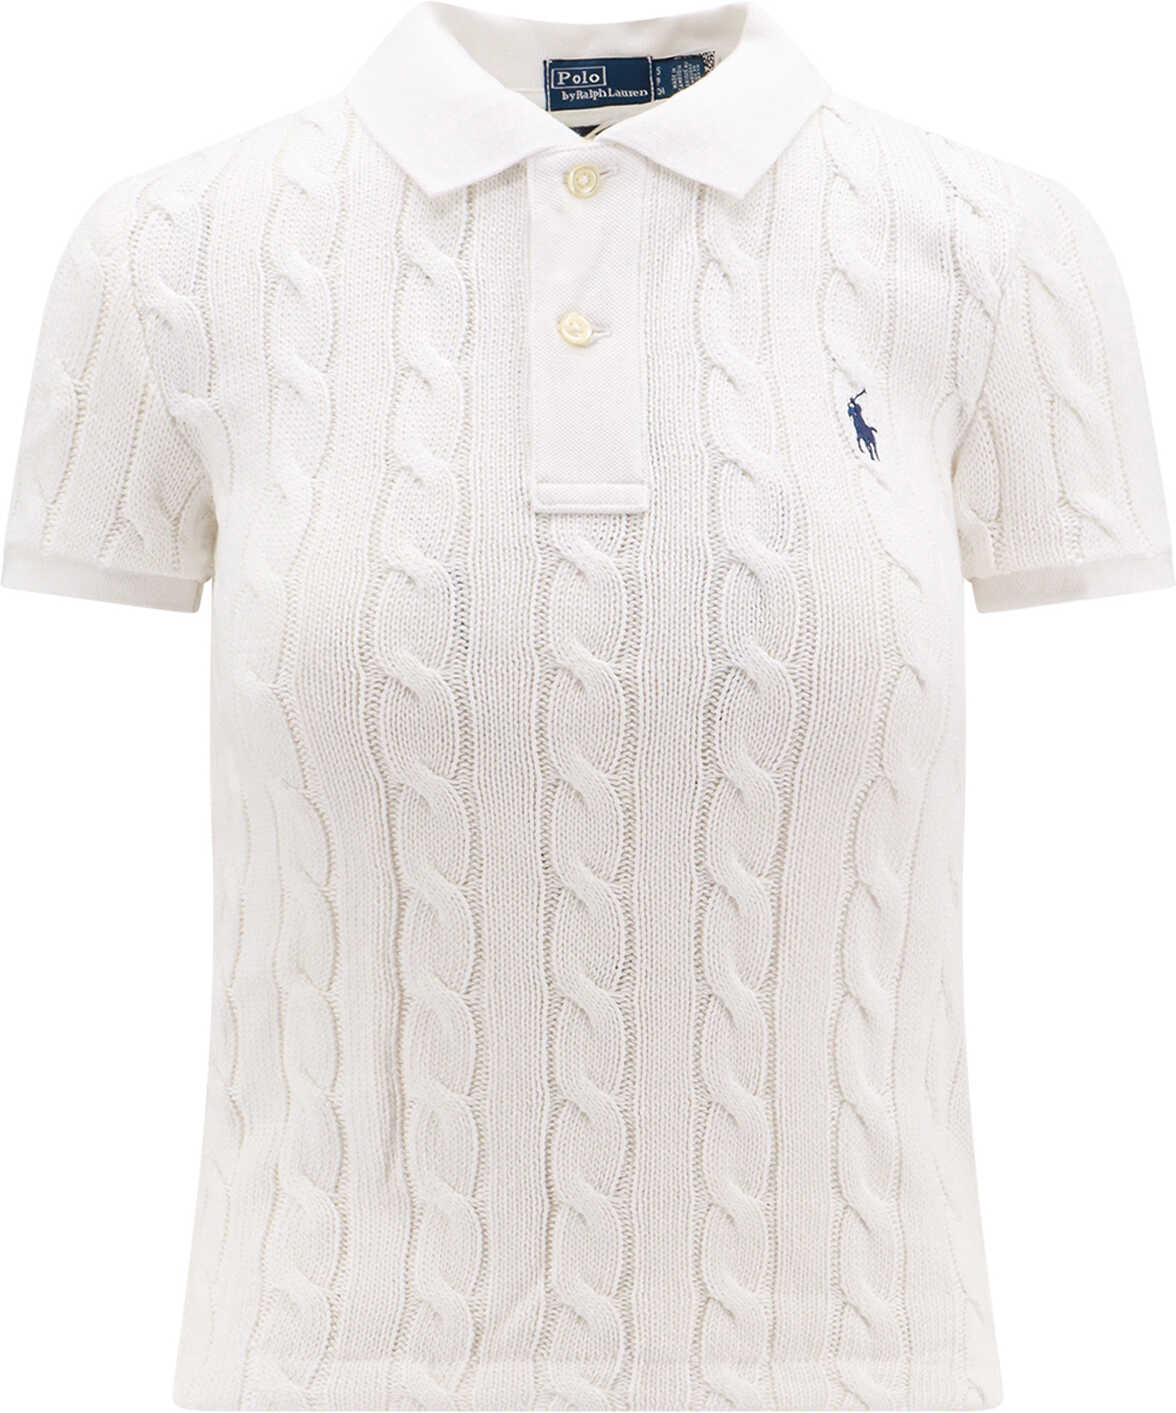 Ralph Lauren Polo Shirt White